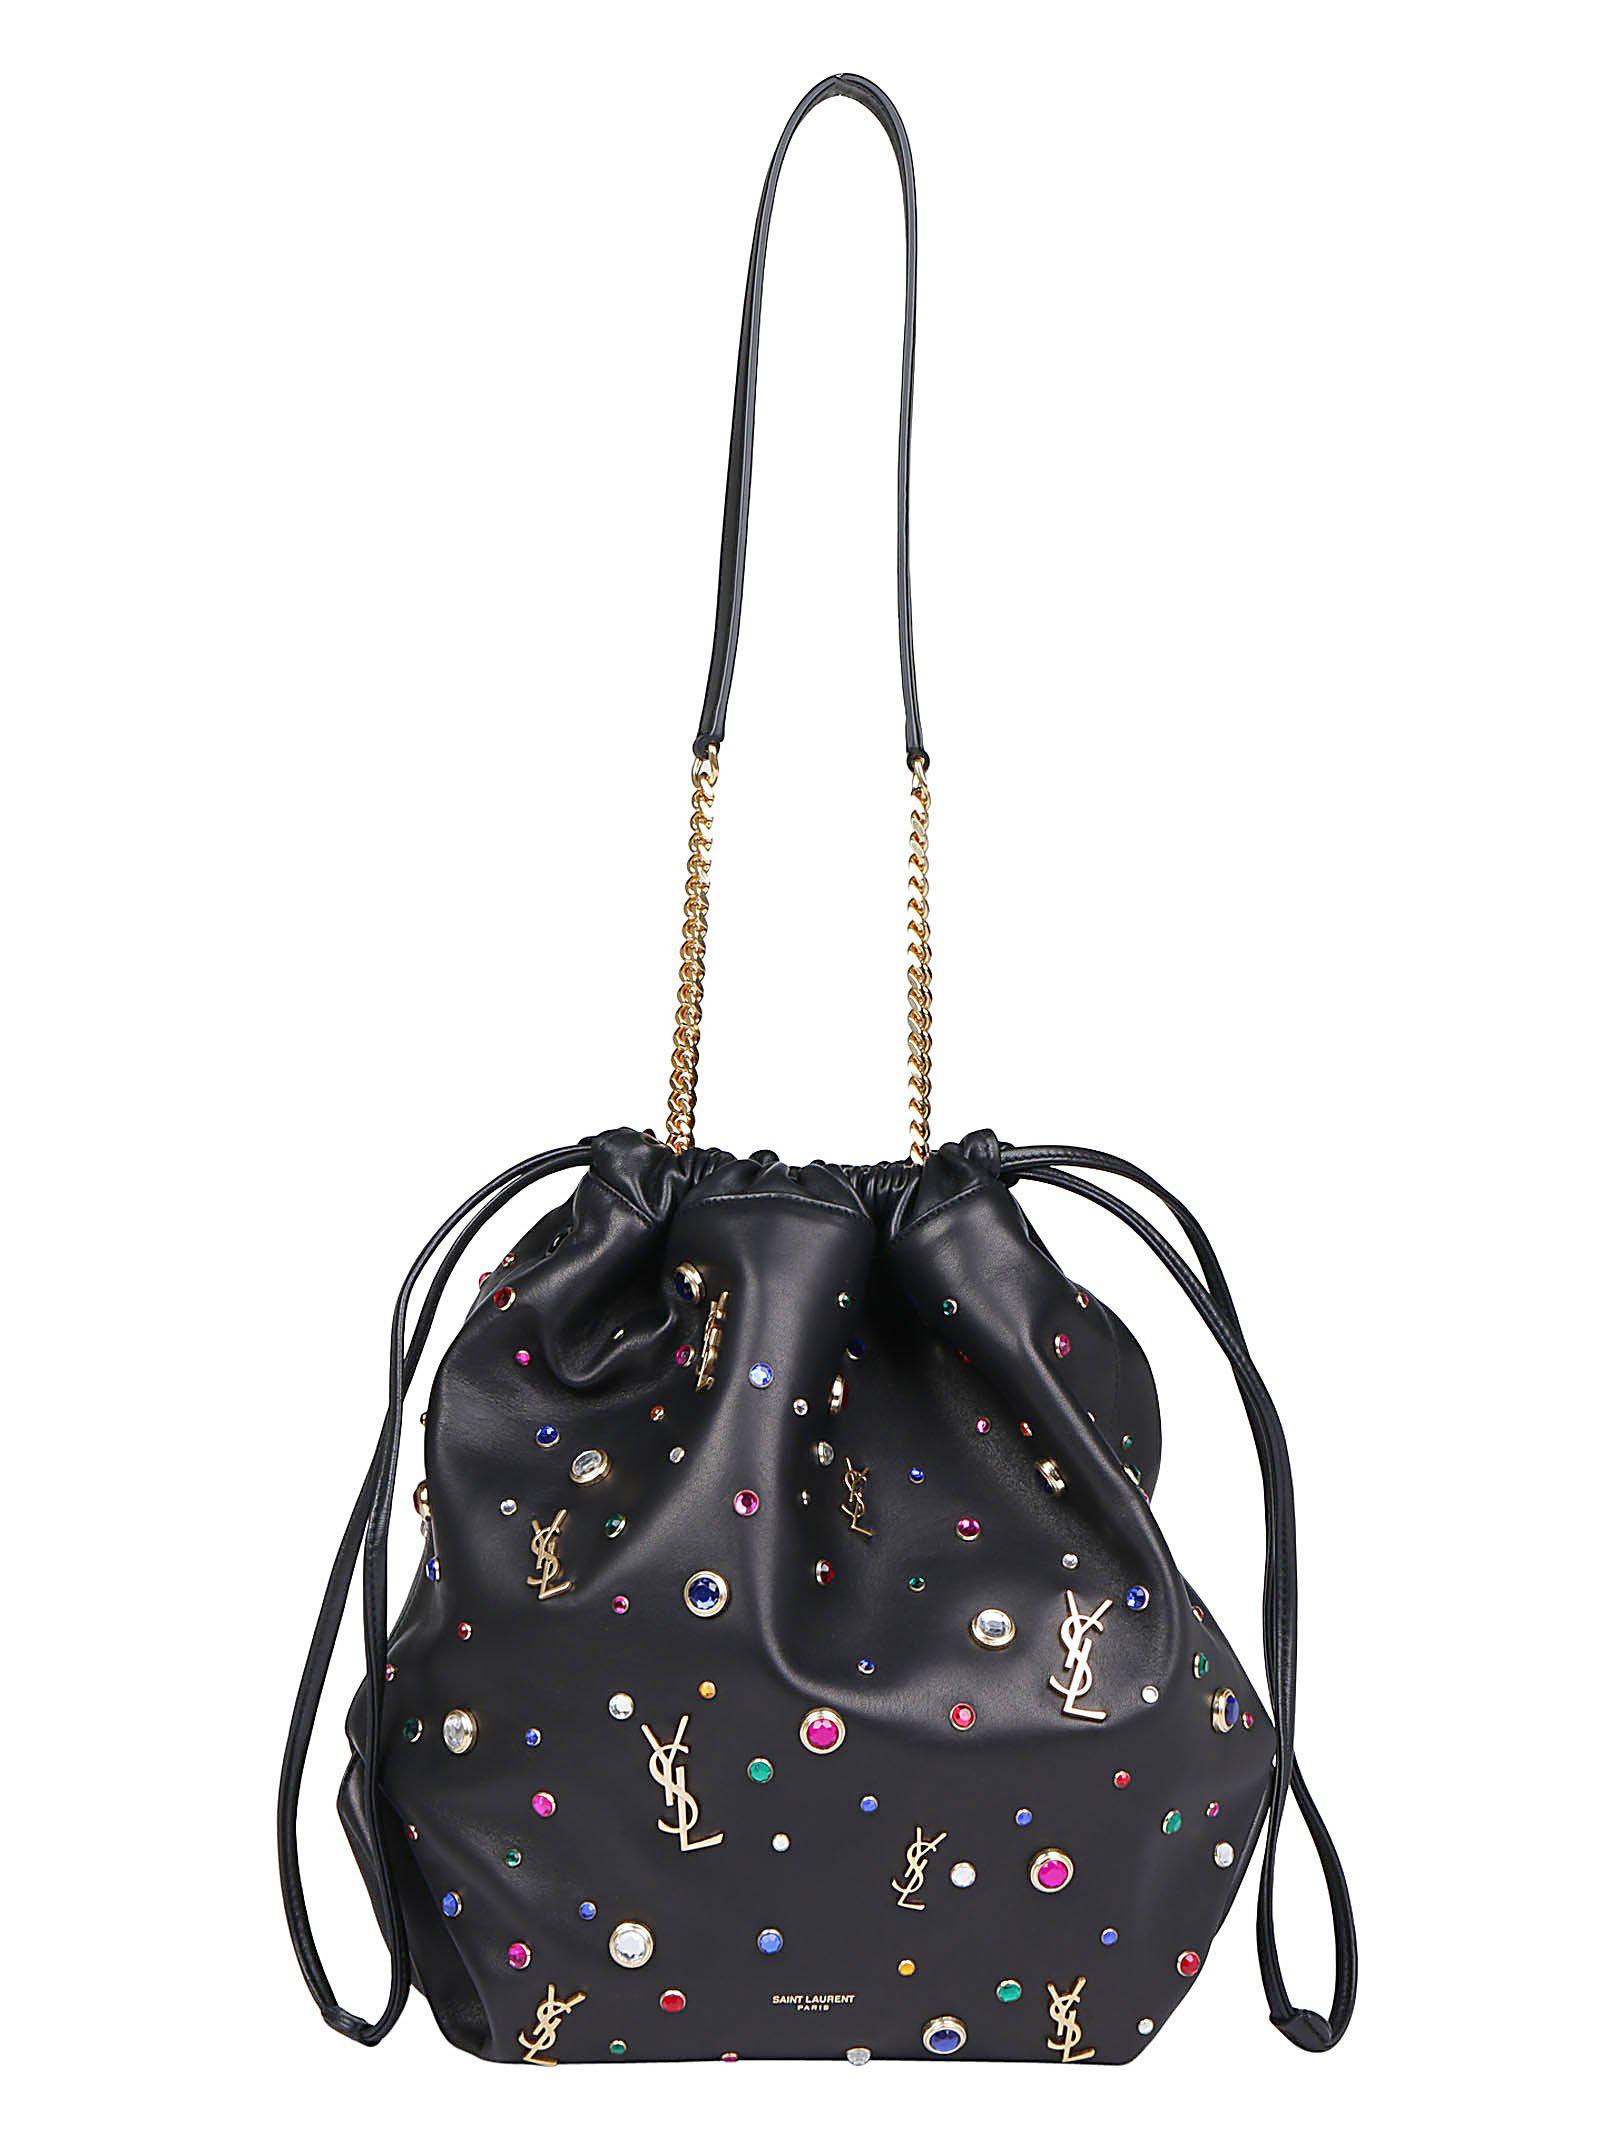 Saint Laurent Teddy Embellished Bucket Bag in Black | Lyst